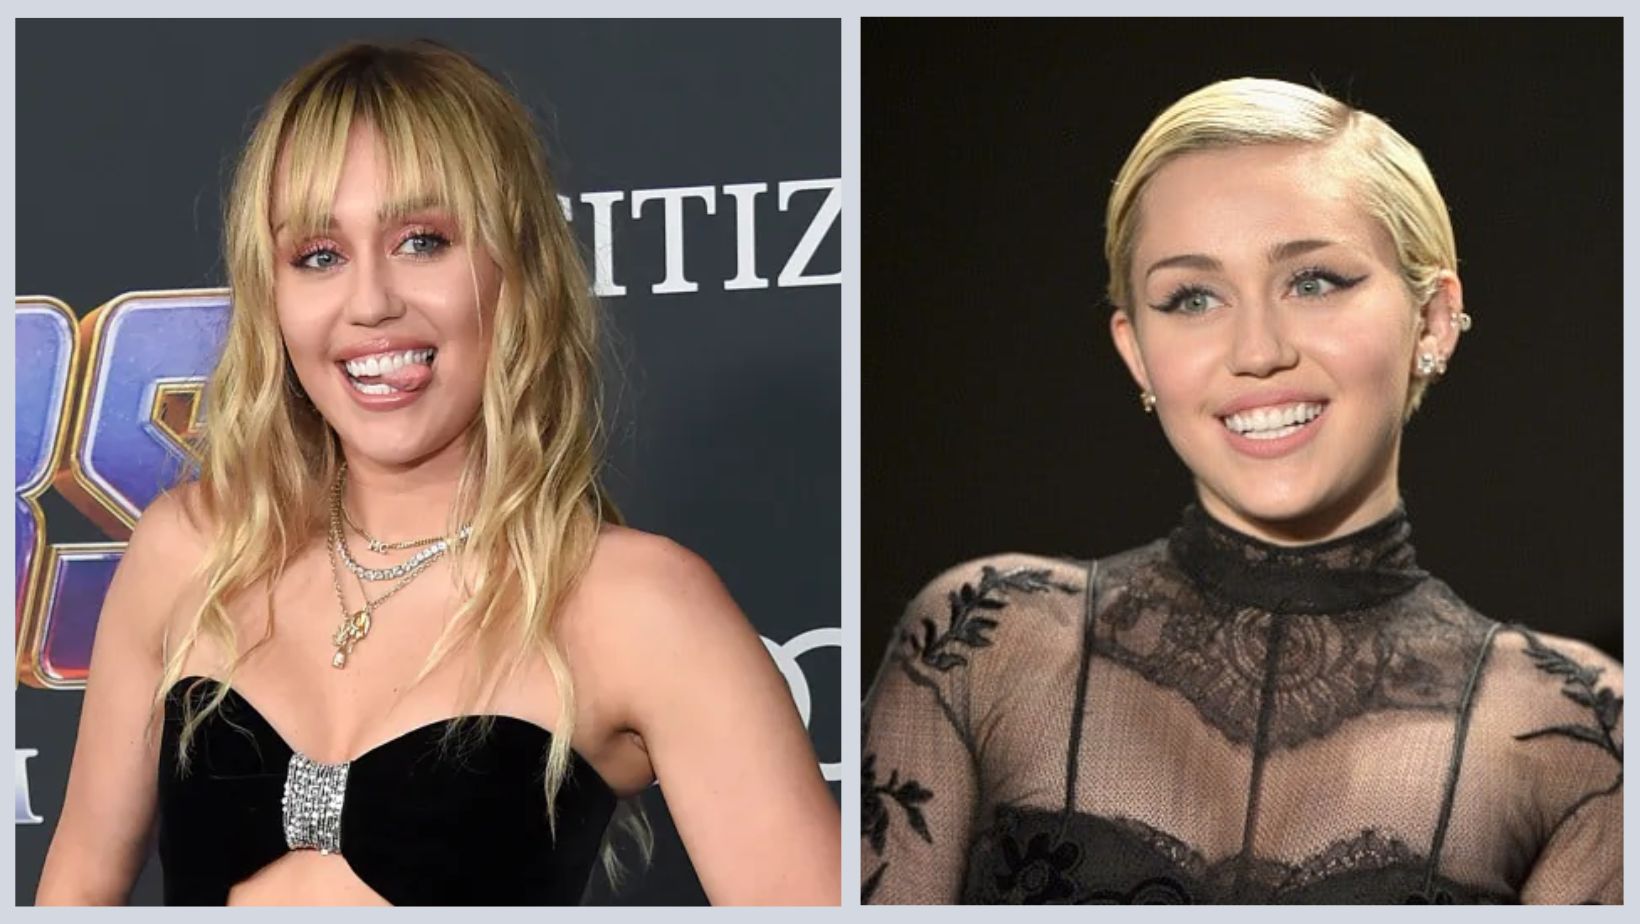 Has Miley Cyrus Undergone Nose Job Surgery?